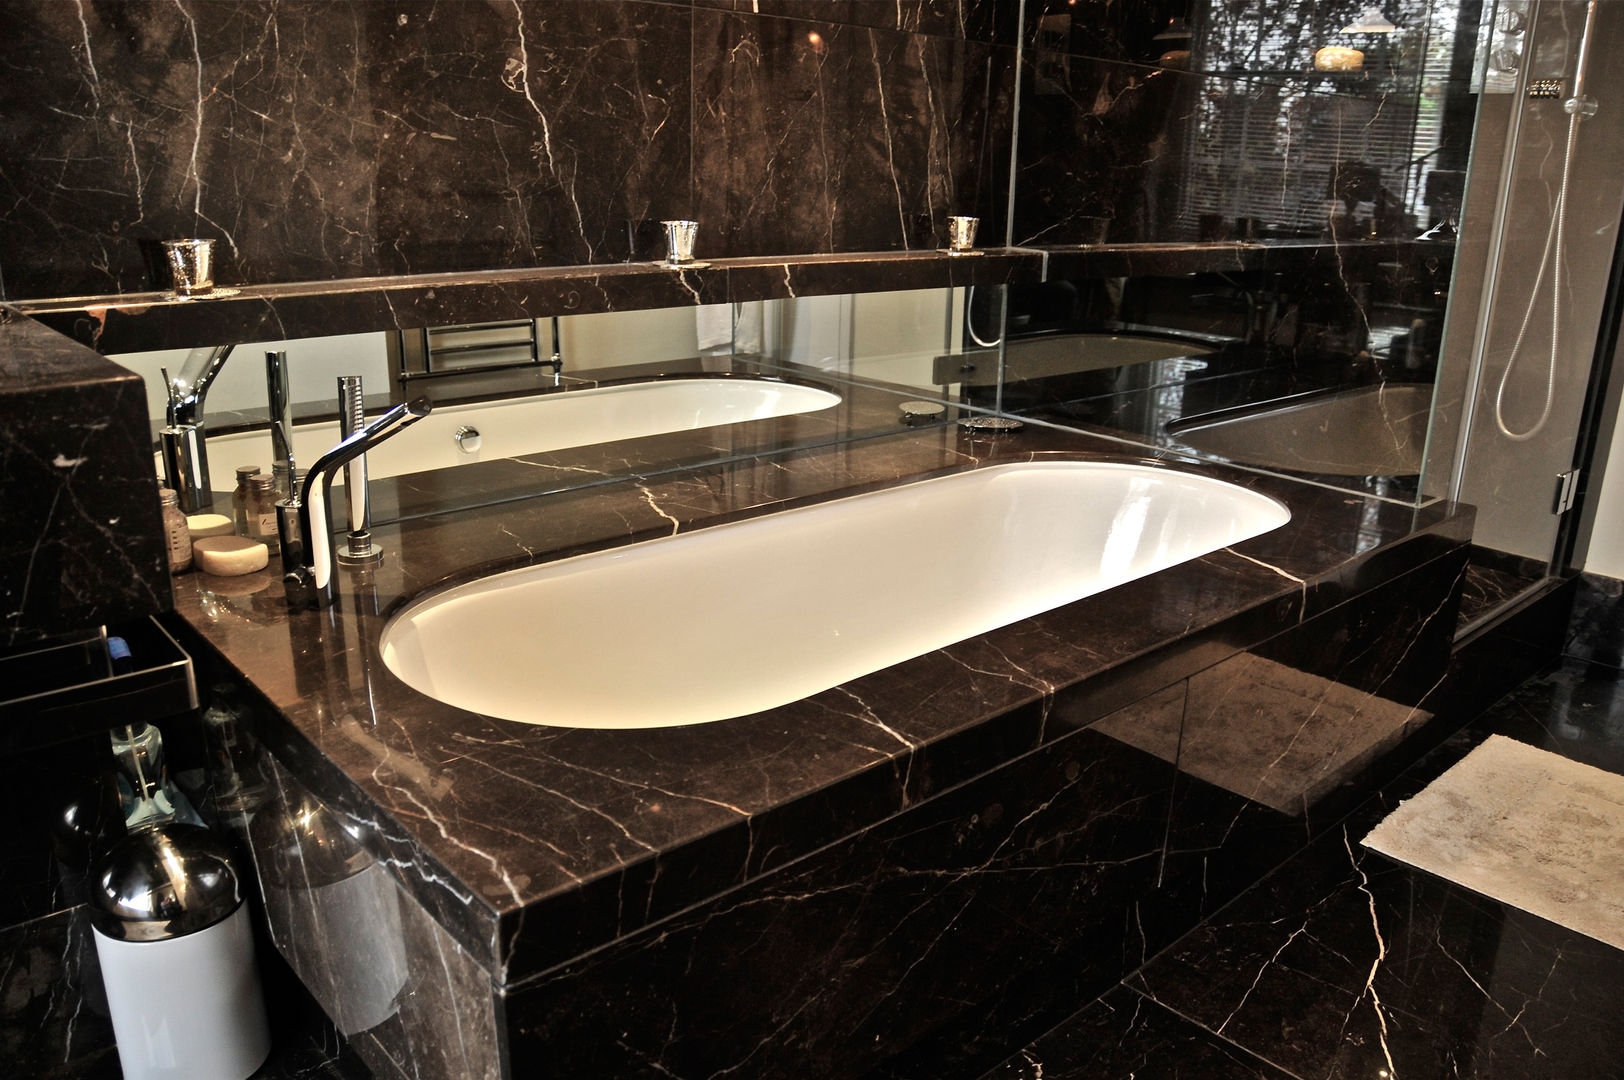 Black Marble Bathroom, Orset Ogle luxury Kitchens & Bathrooms Salle de bain moderne